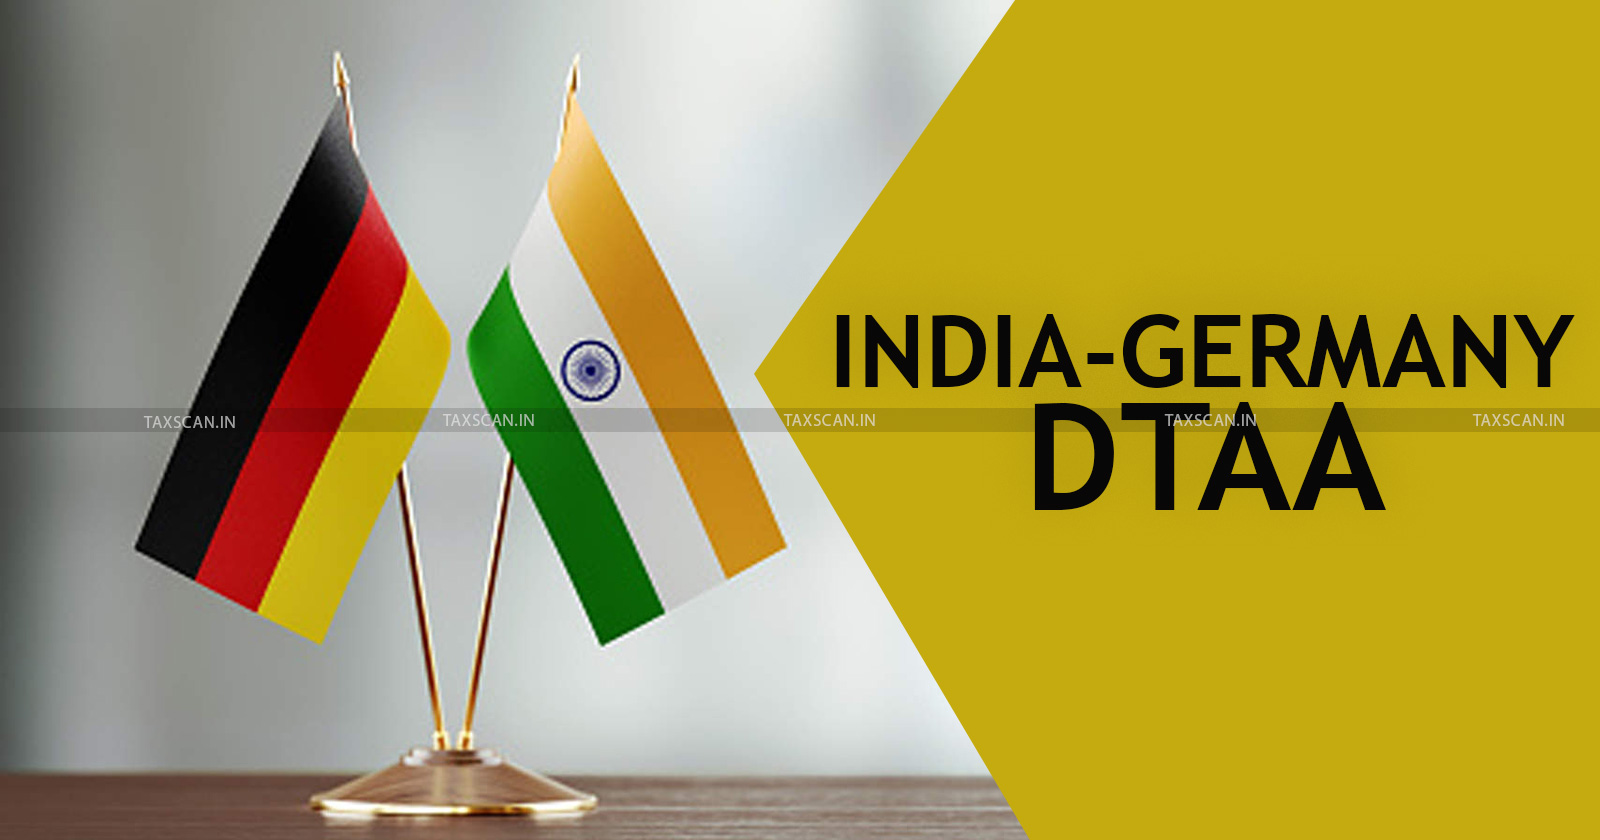 ITAT - ITAT Delhi - Income Tax - Permanent Establishment - India Germany DTAA - Liaison office tax - taxscan